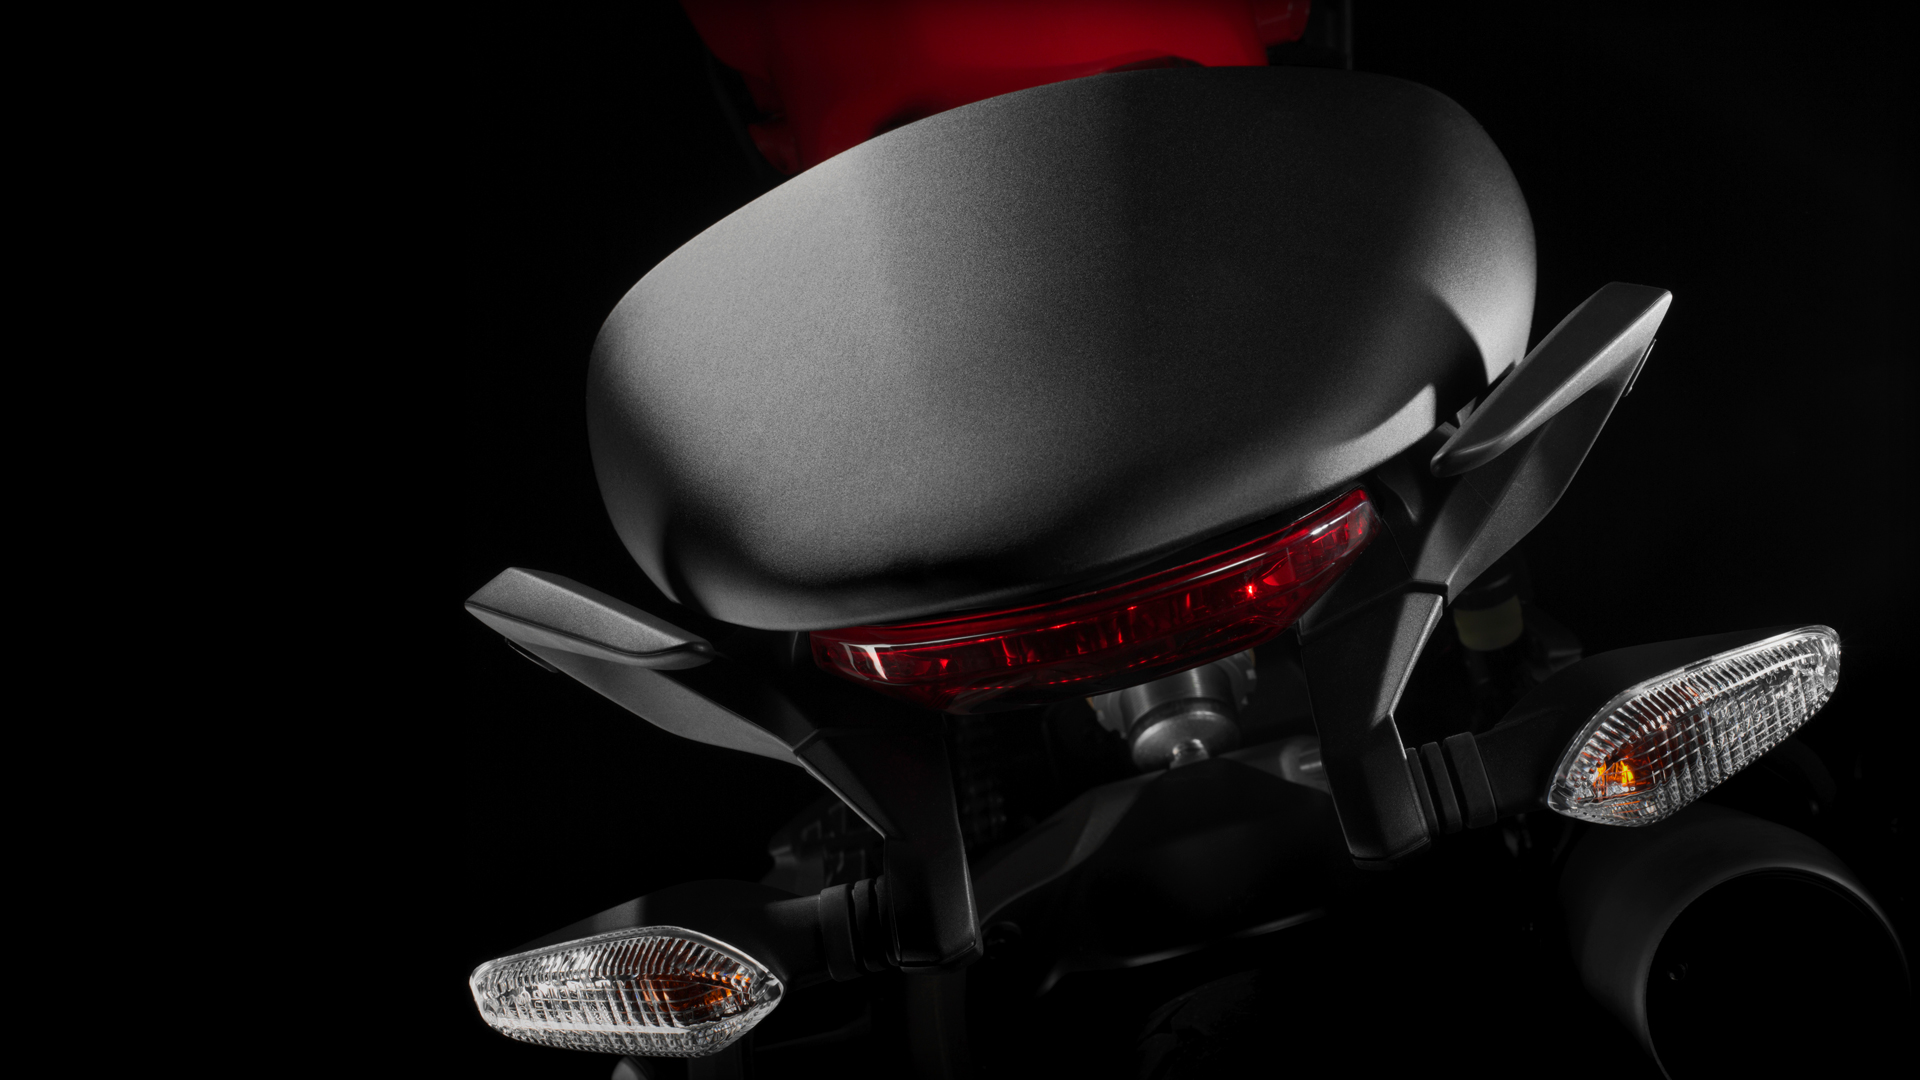 Ducati, Jok dan lampu belakang Ducati Monster 1200 2014: Ducati Monster 1200 Resmi Diperkenalkan [with High Quality Photos]